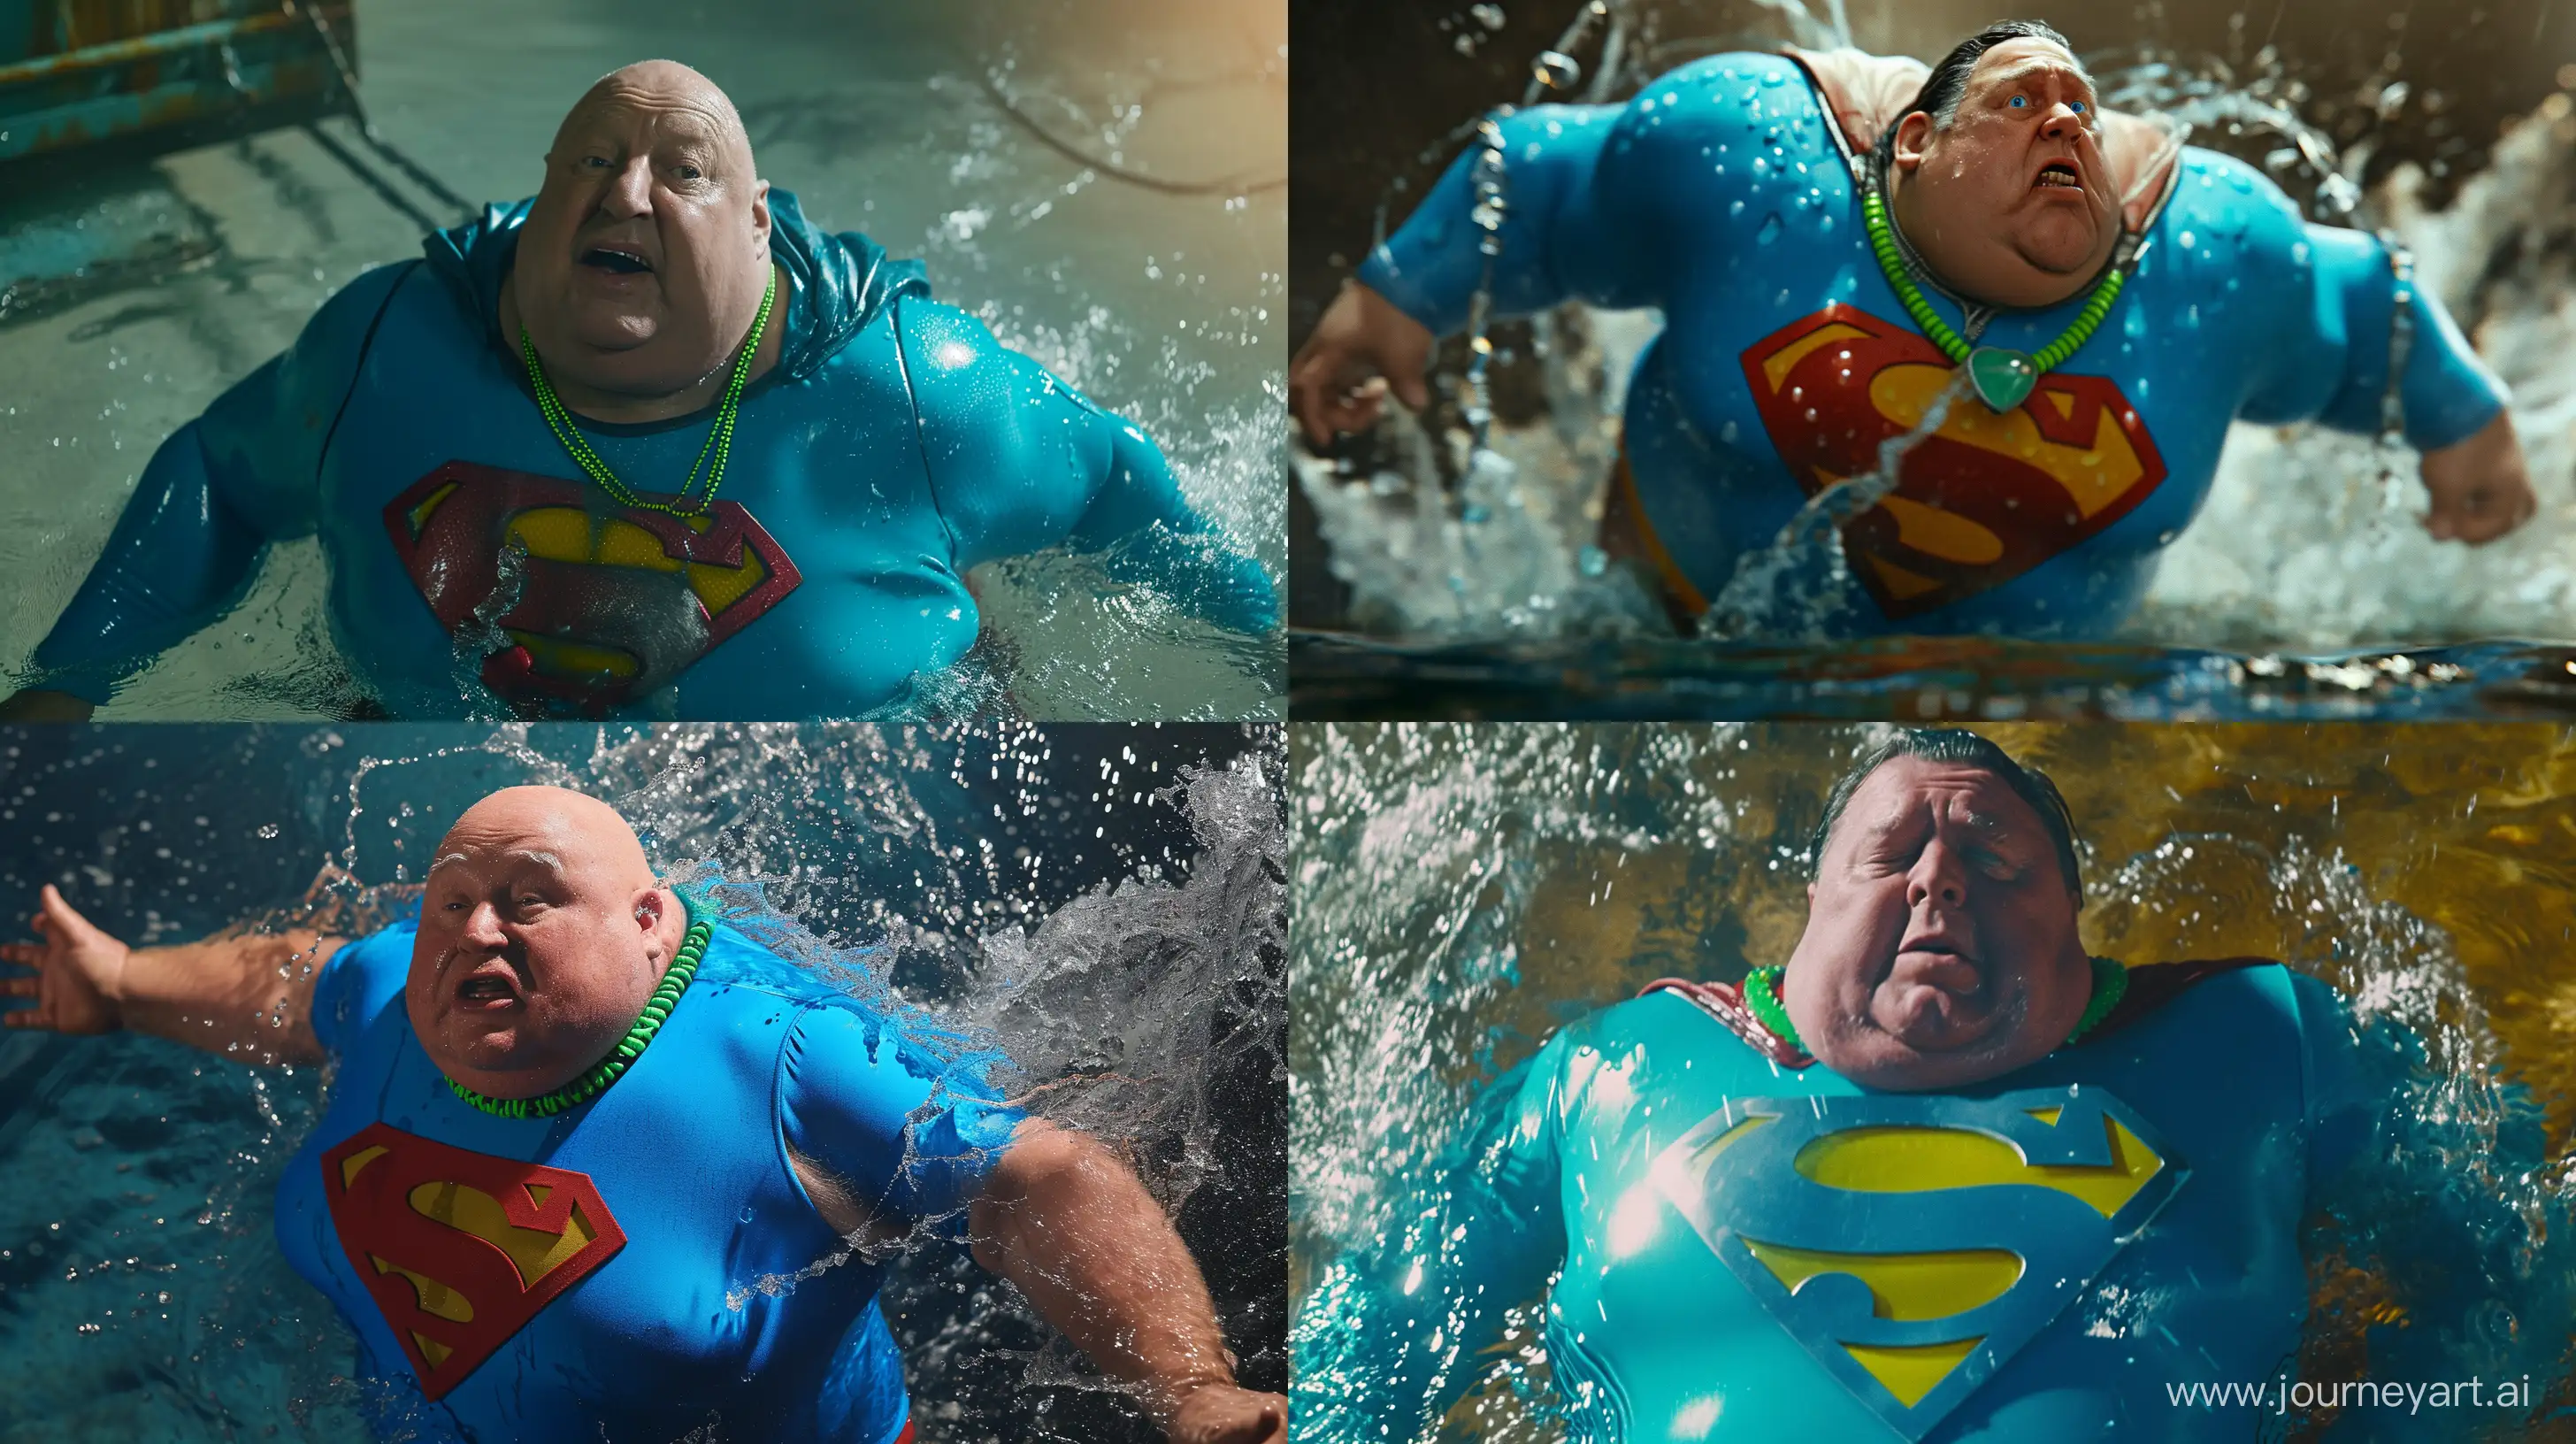 Elderly-Supermans-Splash-Vibrant-70YearOld-Takes-a-Dive-in-Bright-Blue-Costume